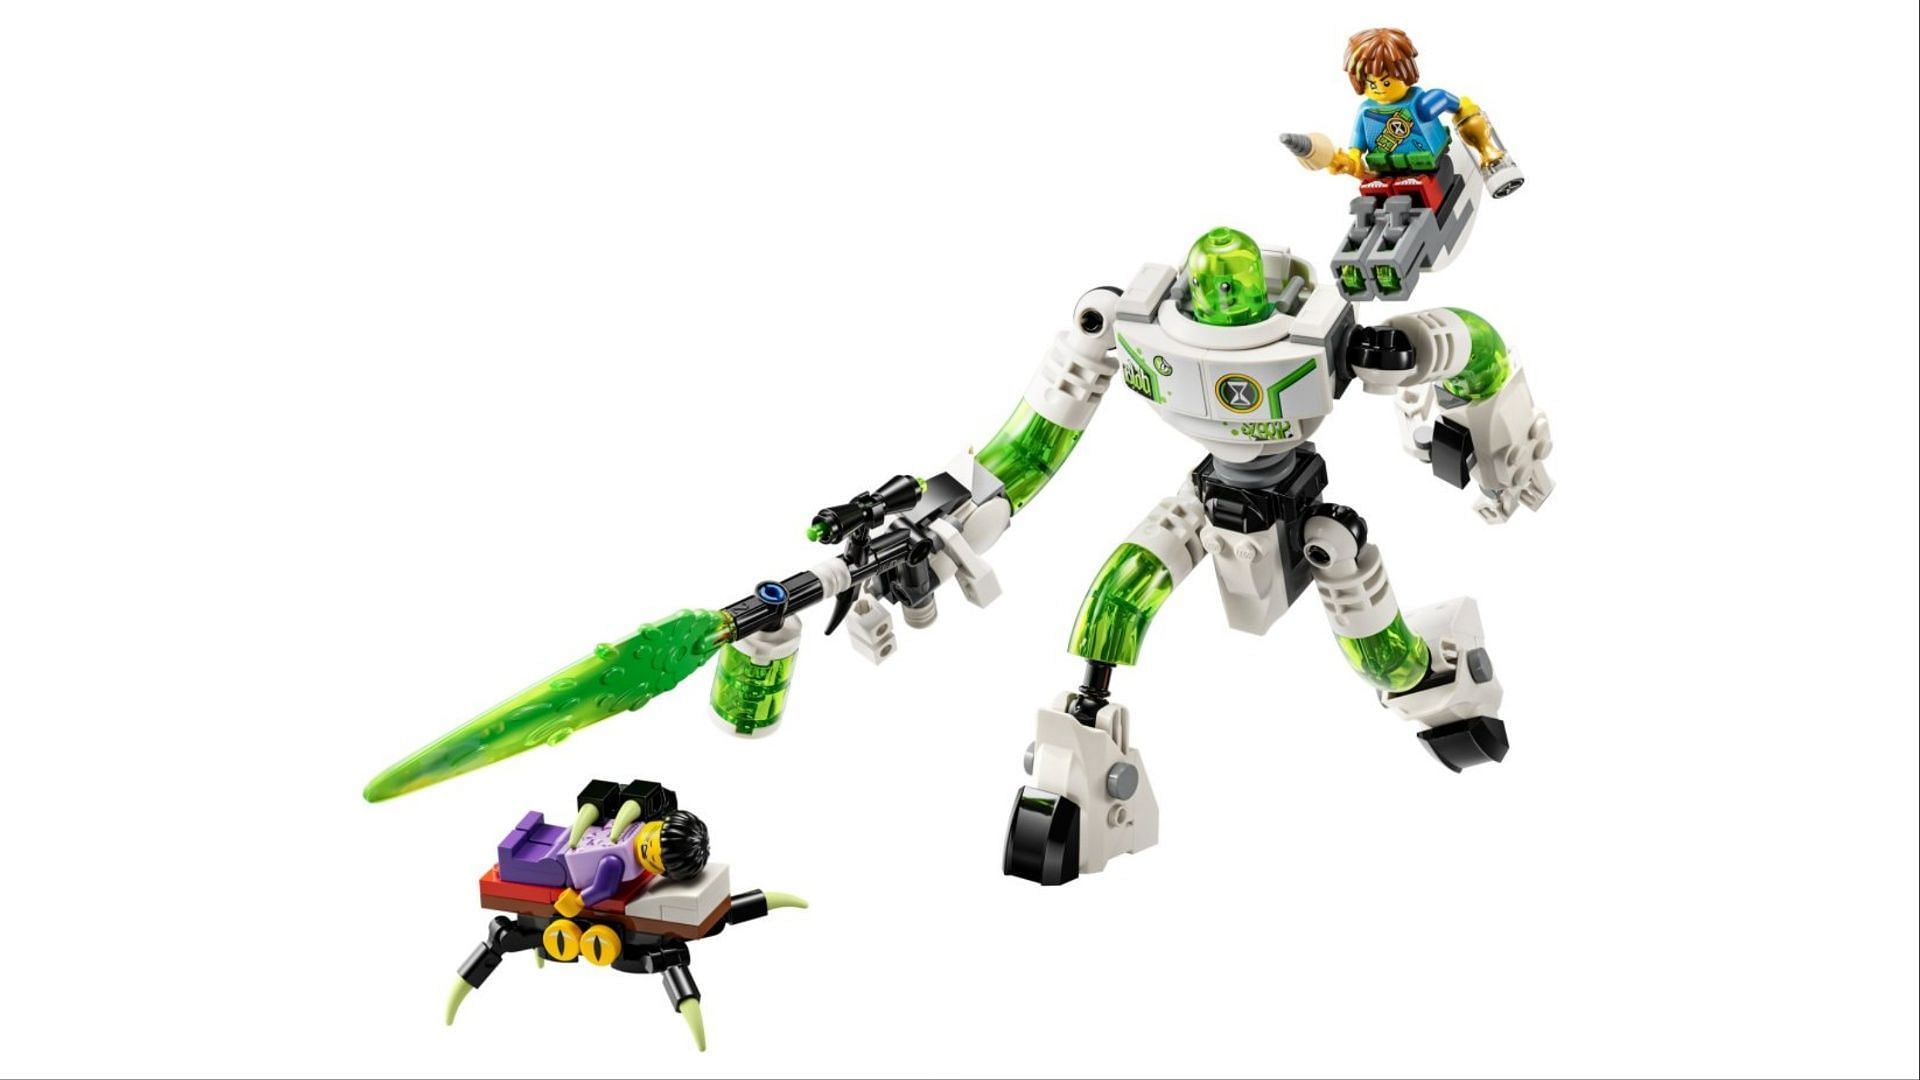 DREAMZzz Mateo and Z-Blob the Robot (Image via LEGO)